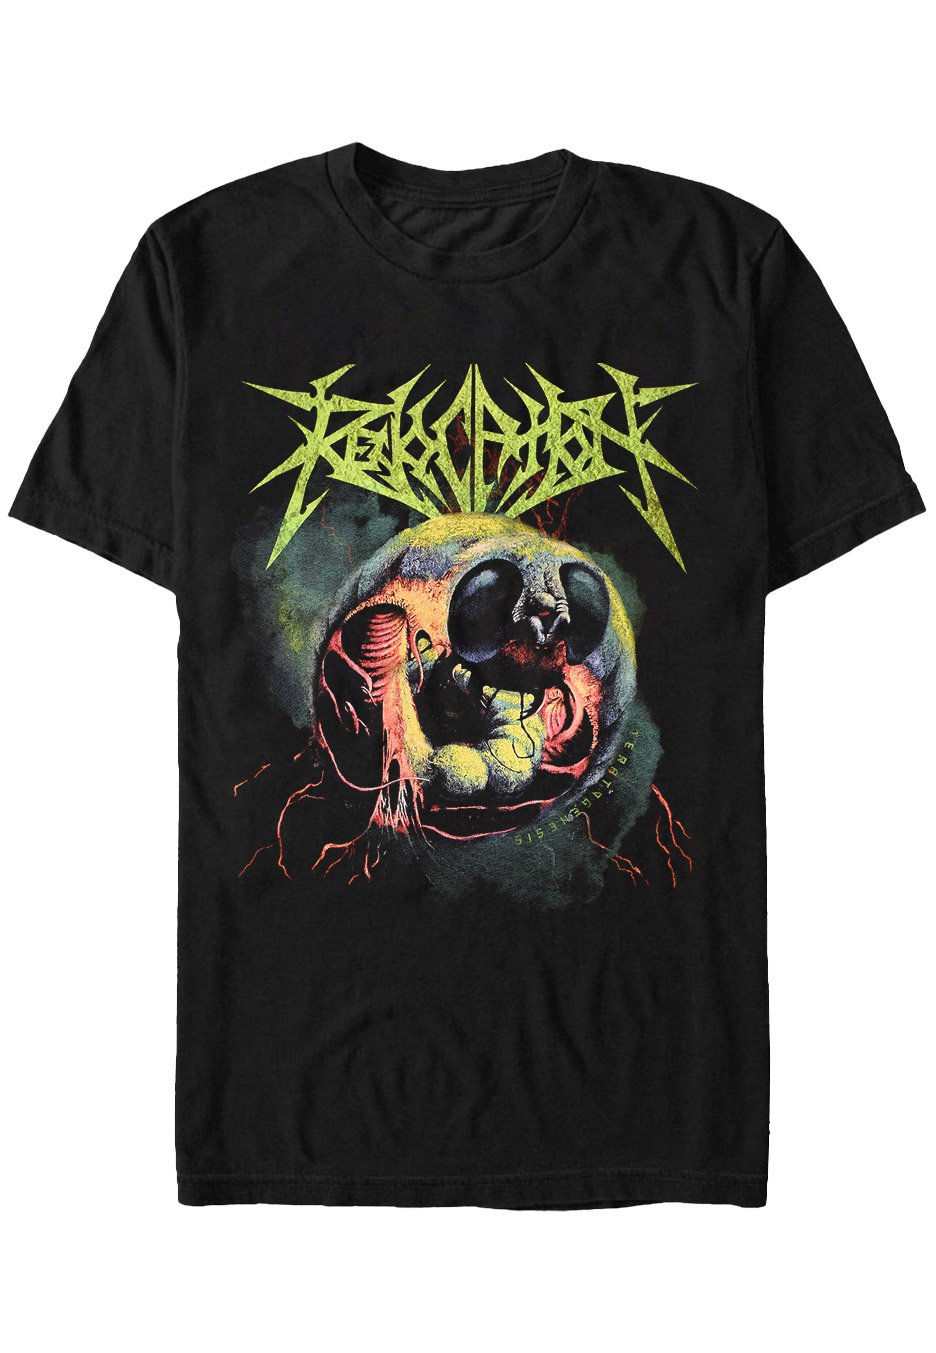 Revocation - Teratogenesis - T-Shirt